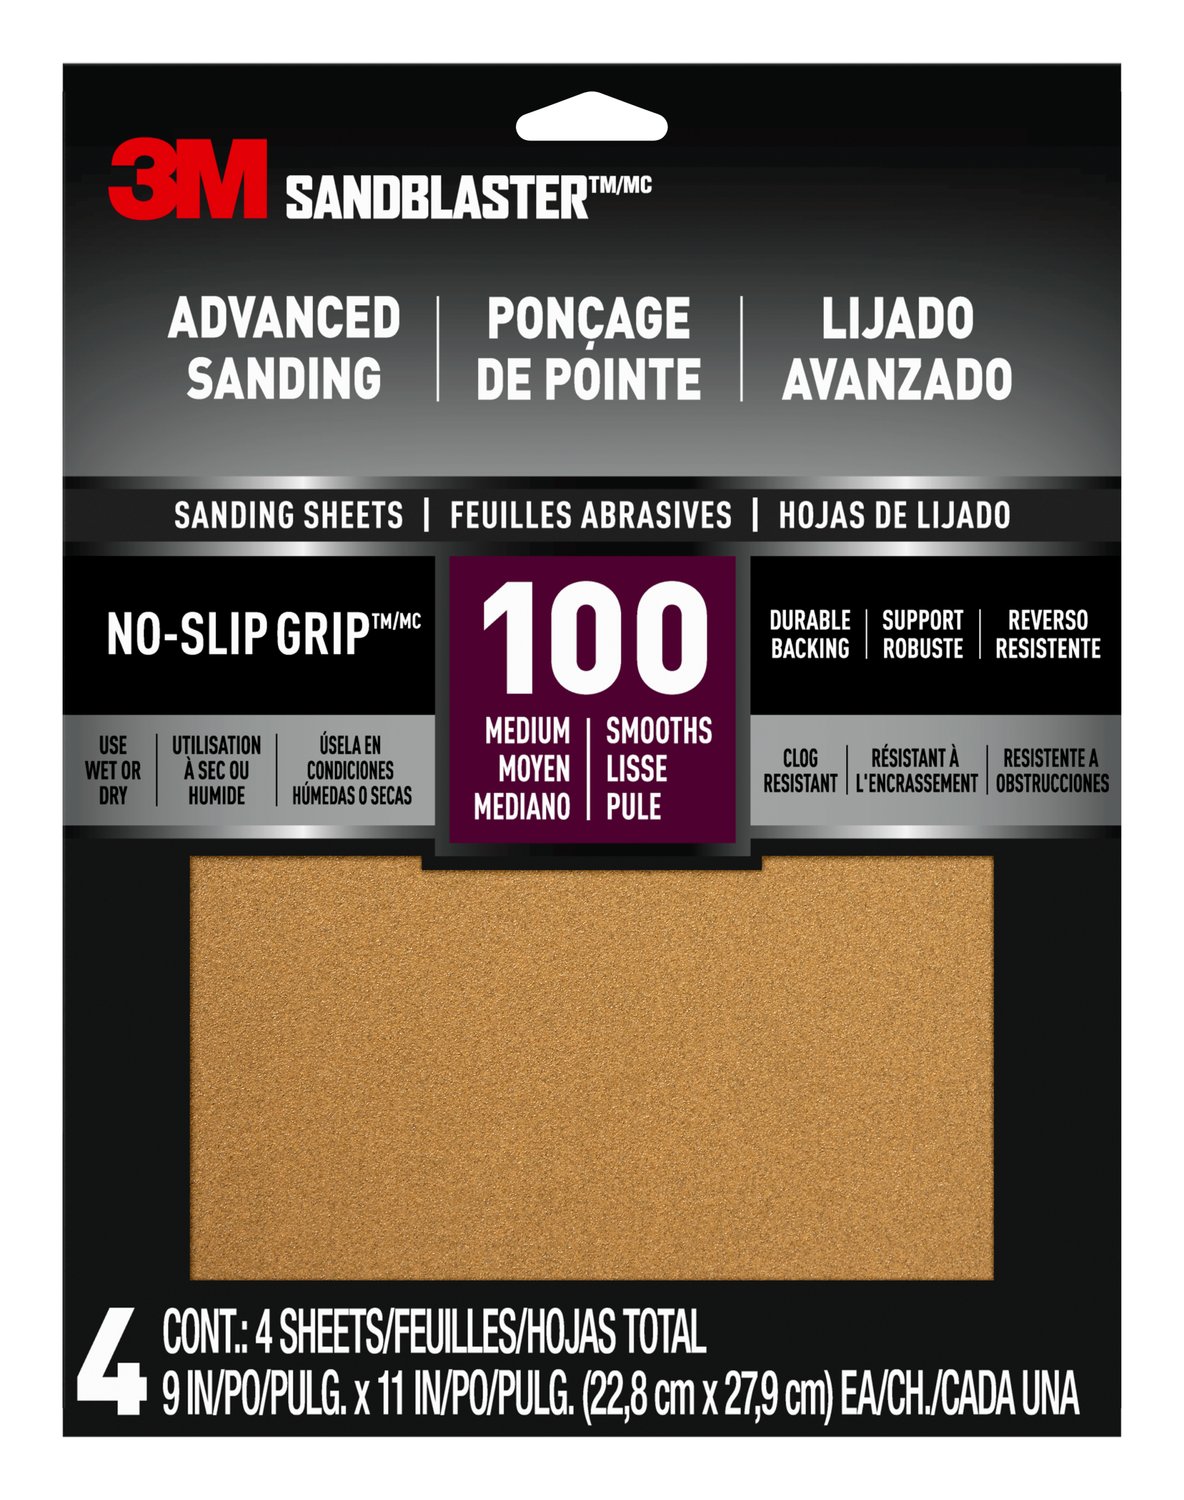 7100141239 - 3M SandBlaster Advanced Sanding Sanding Sheets w/ NO-SLIP GRIP,
20100-G-4 ,100 grit, 9 in x 11 in, 4/pk